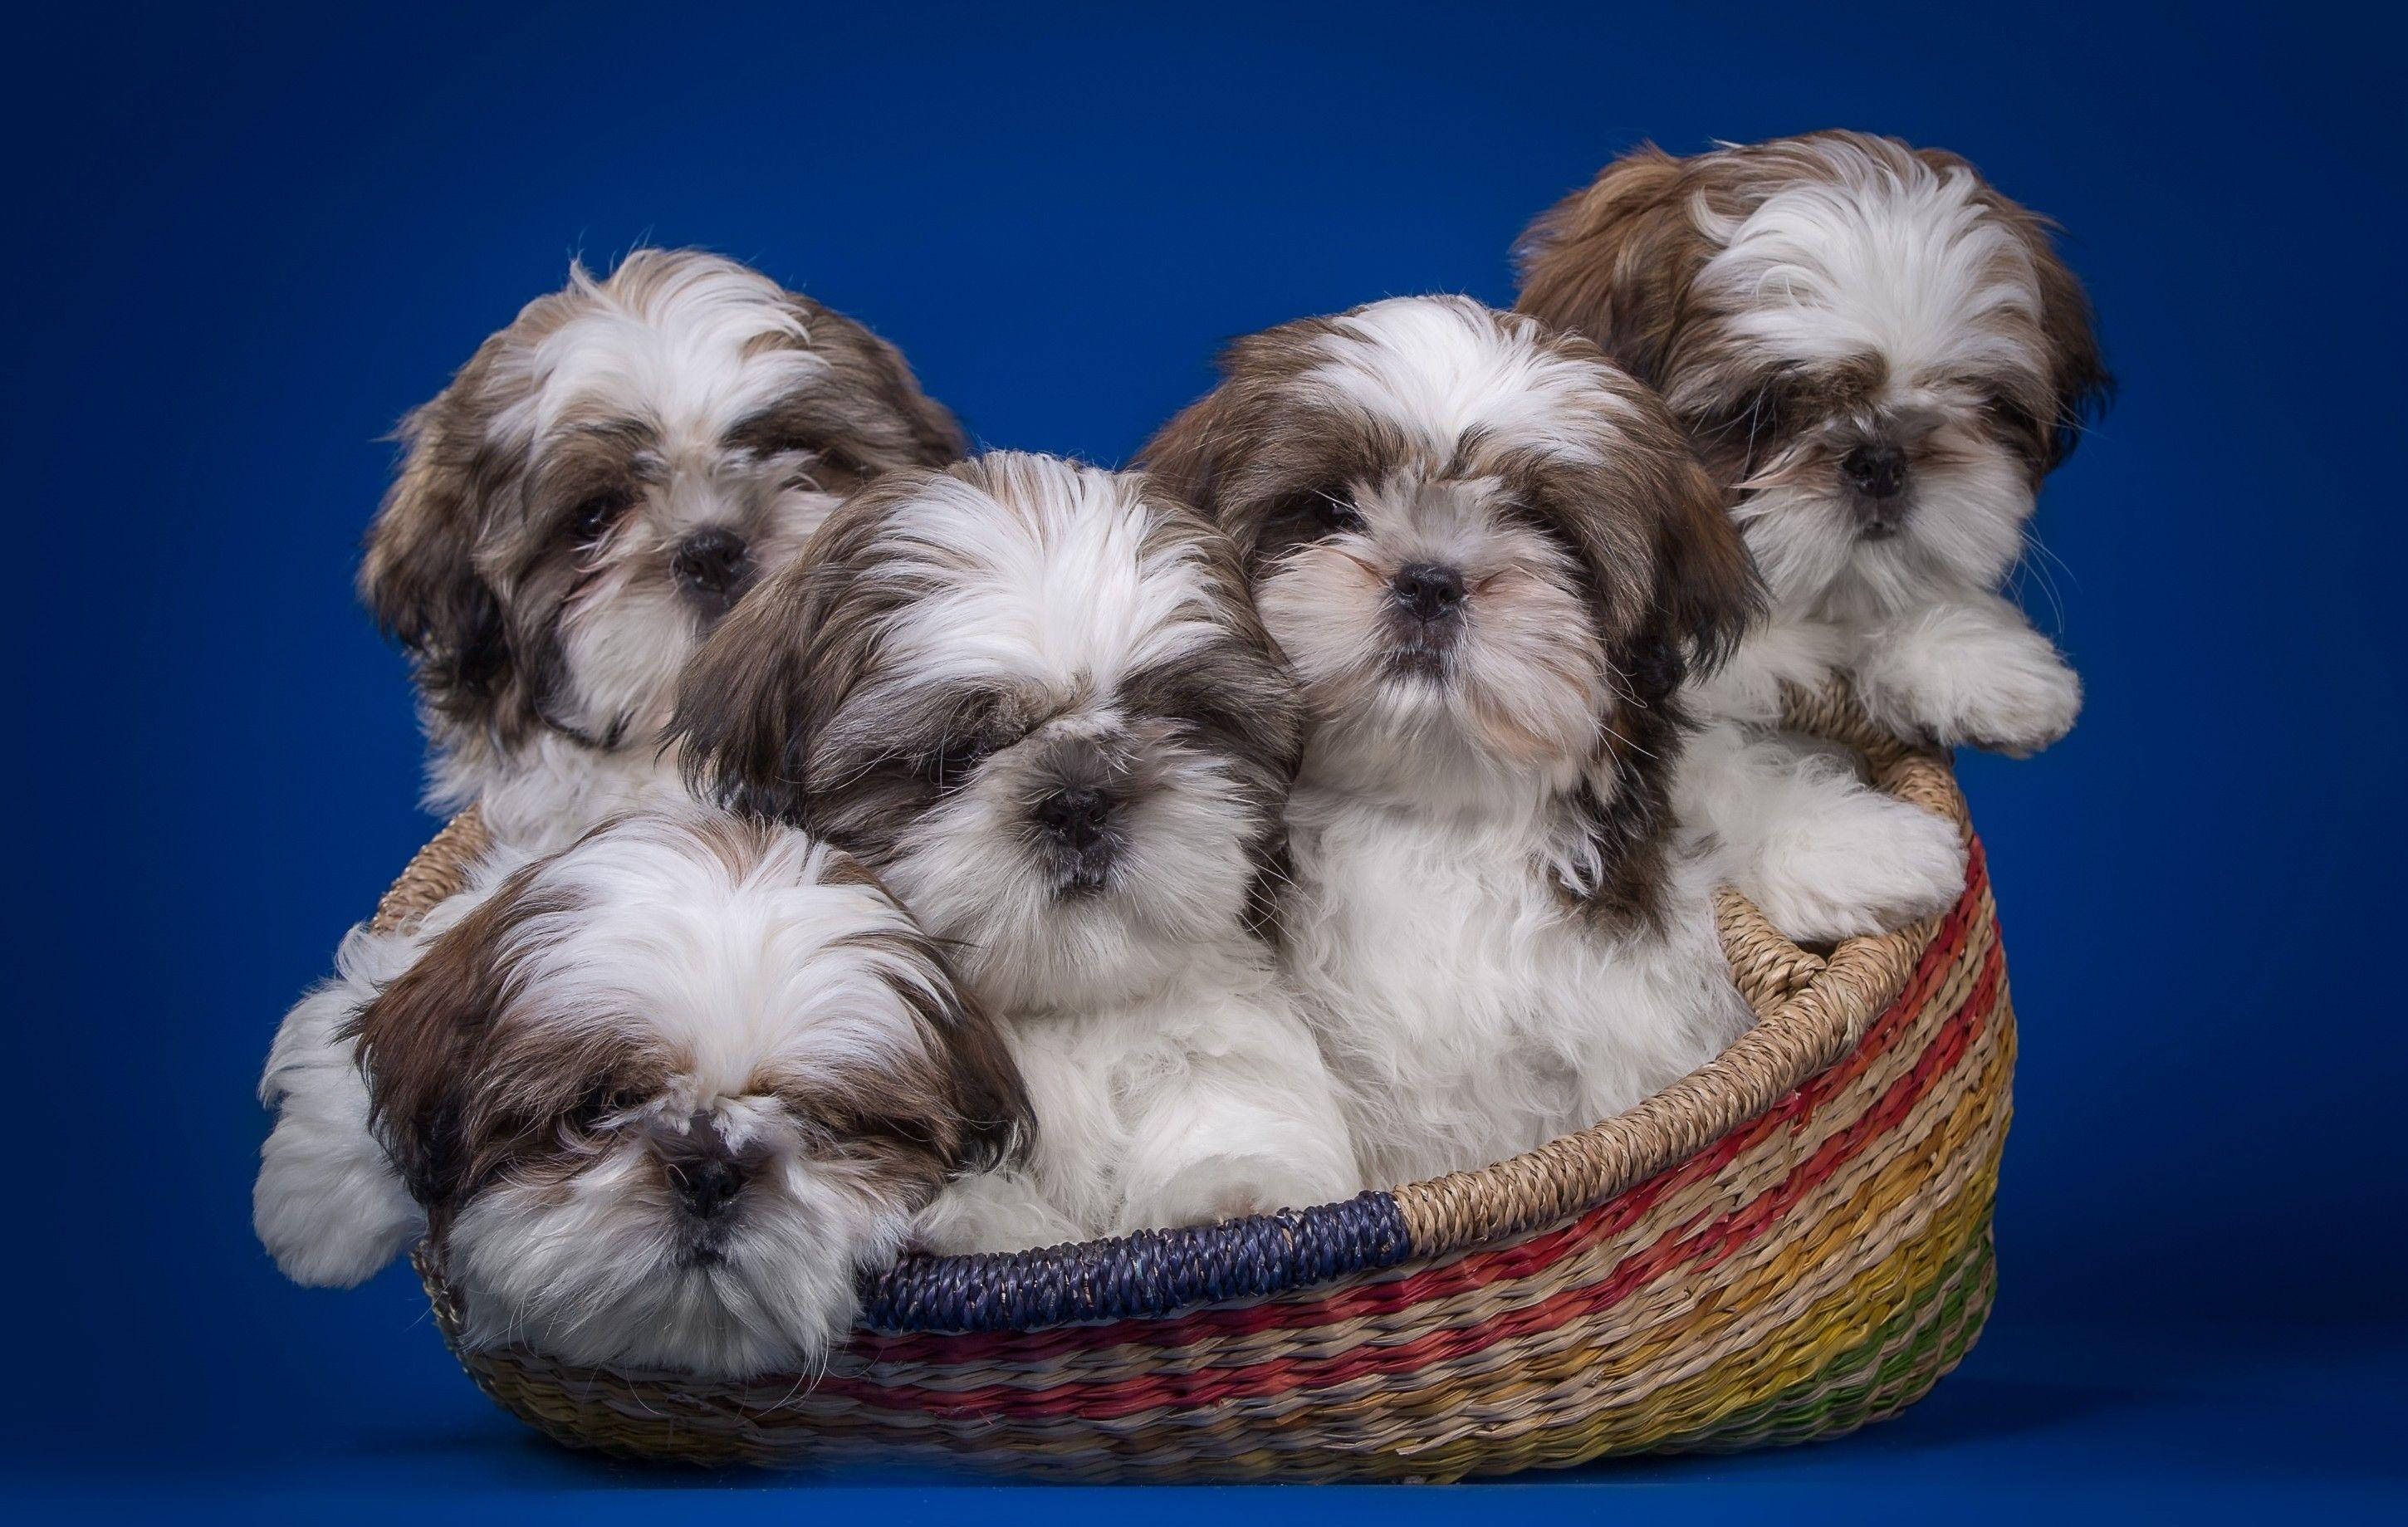 Adorable Shih Tzu puppies in a wicker basket Wallpaper